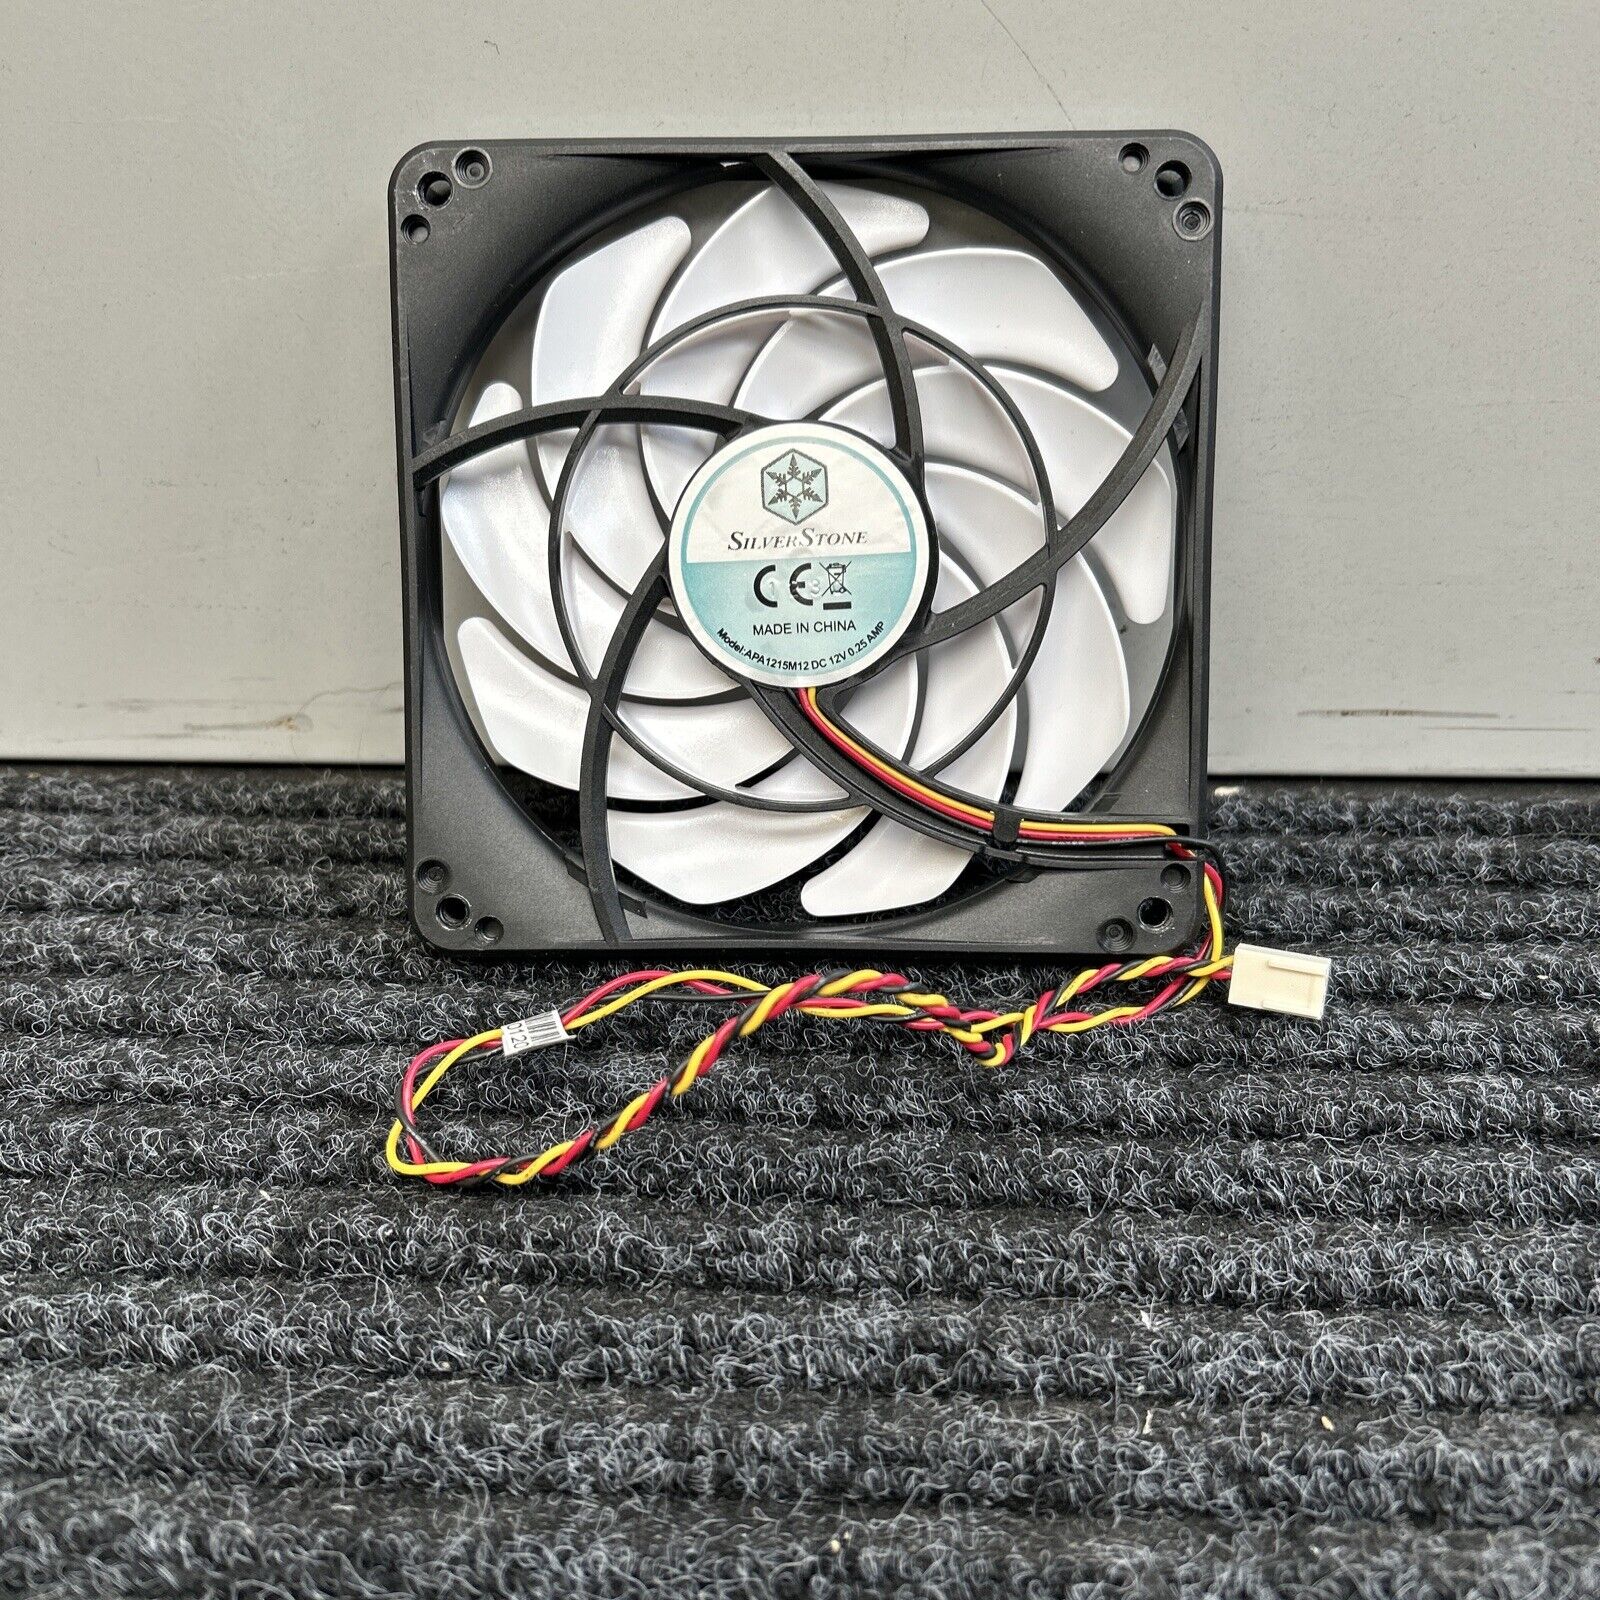 Silverstone Computer Case Cooling Fan